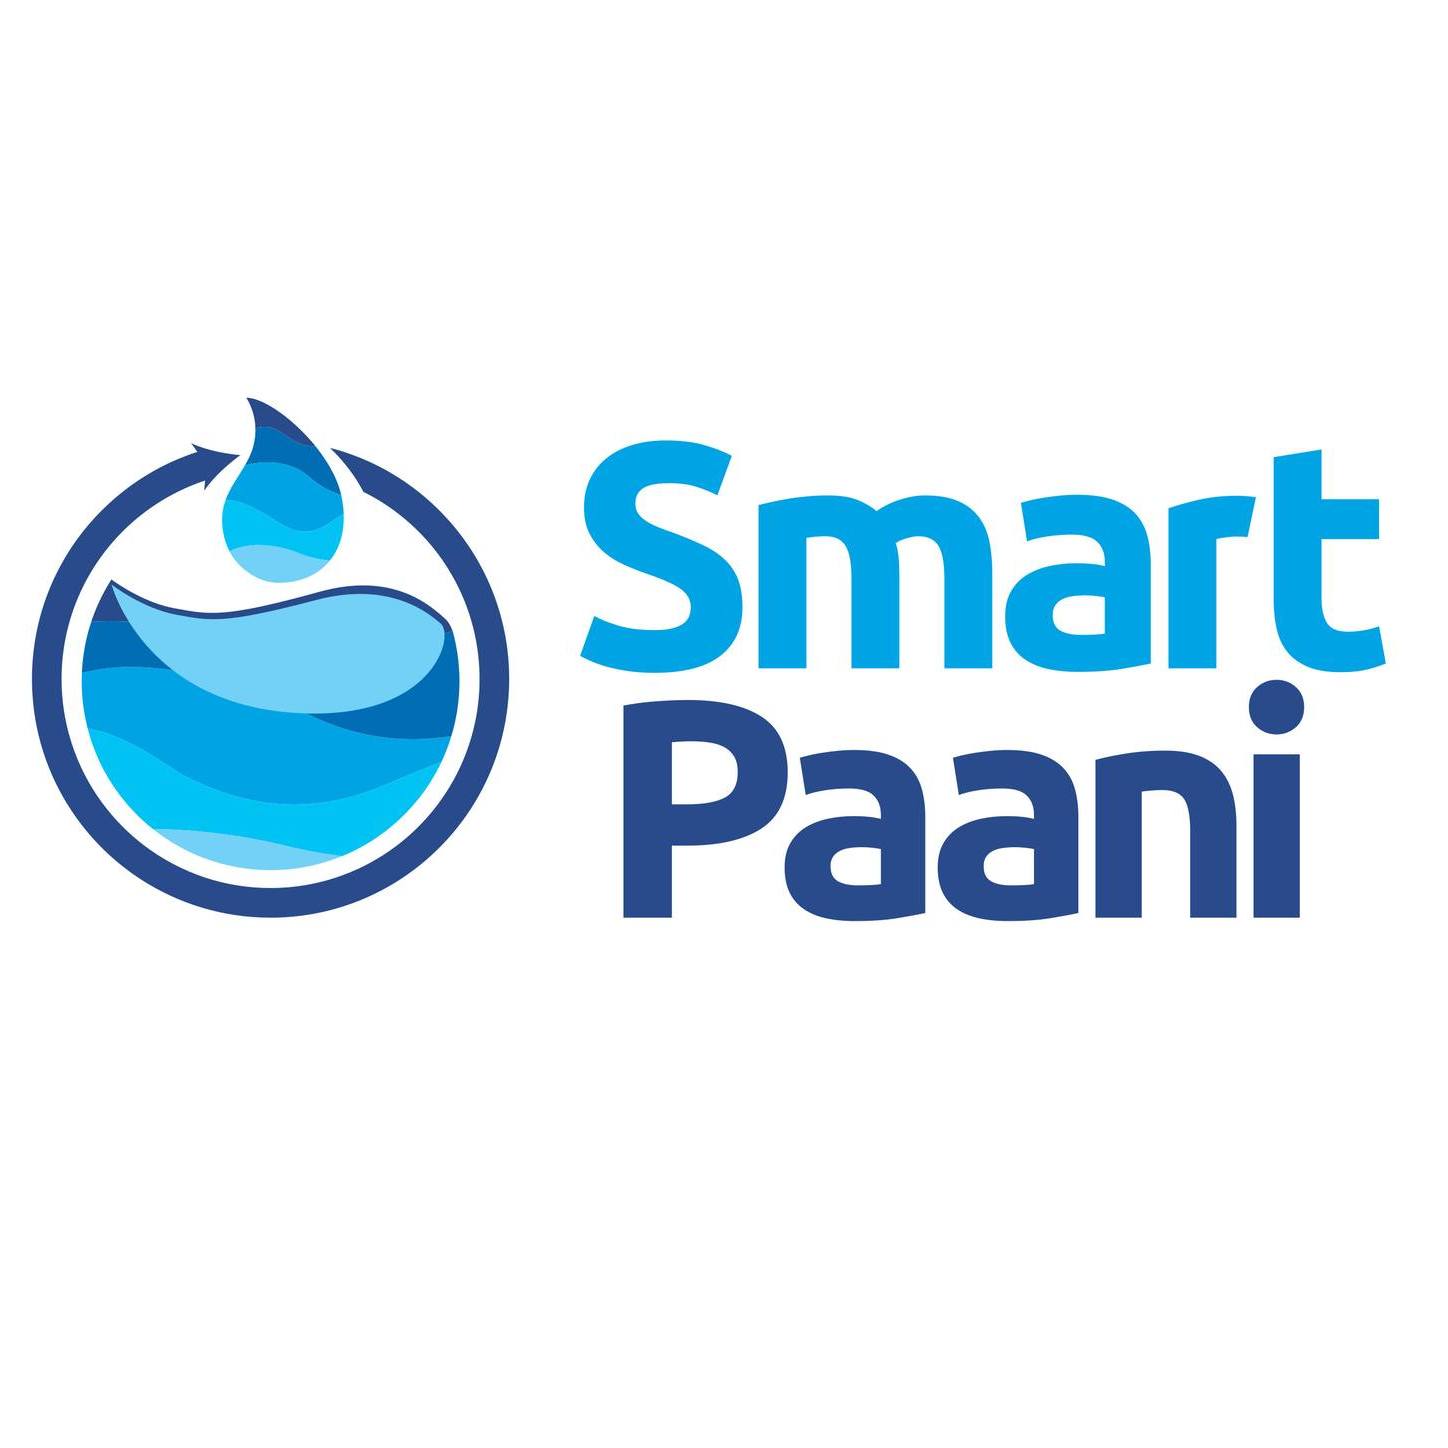 SmartPaani